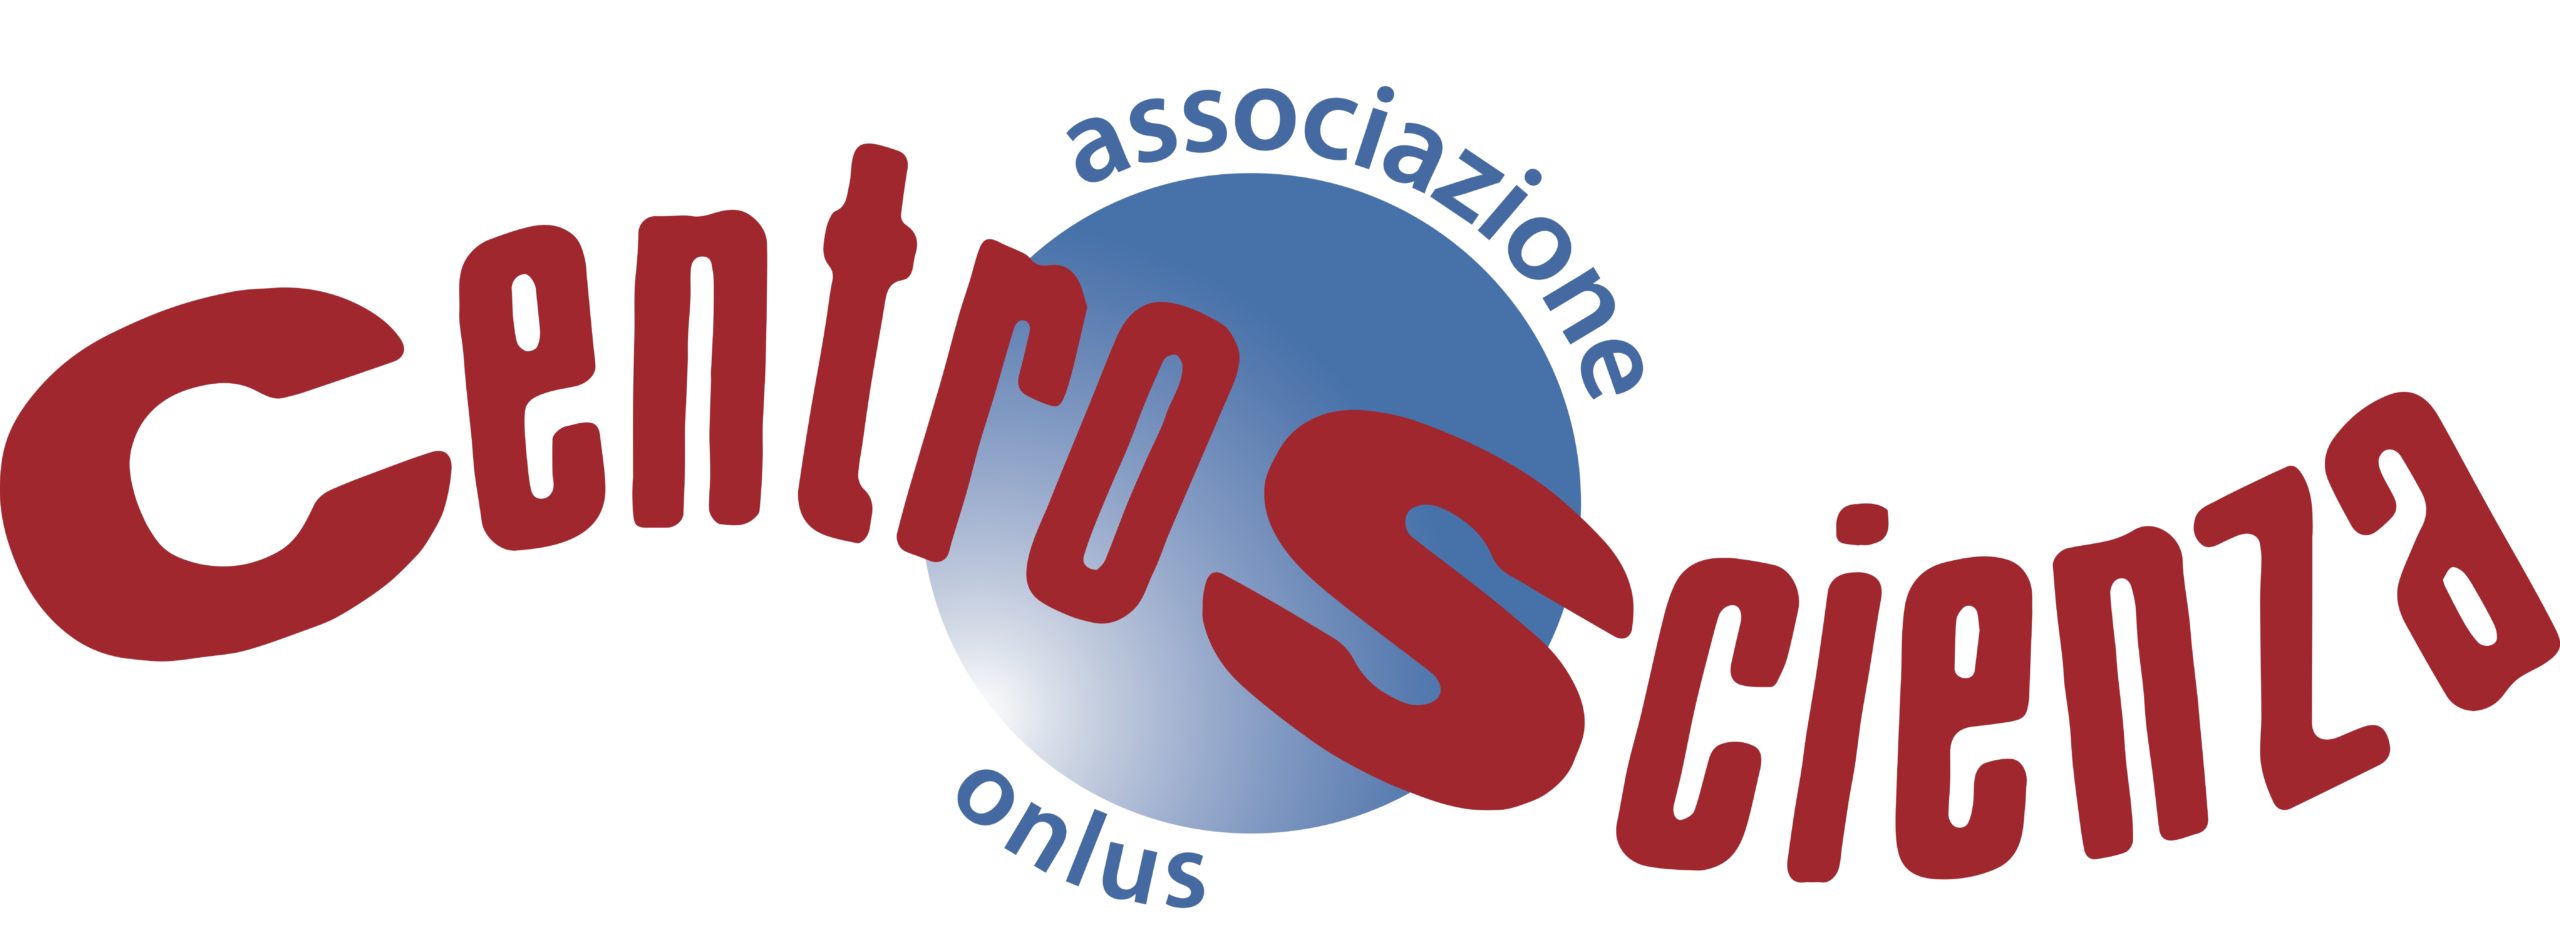 Associazione CentroScienza Onlus